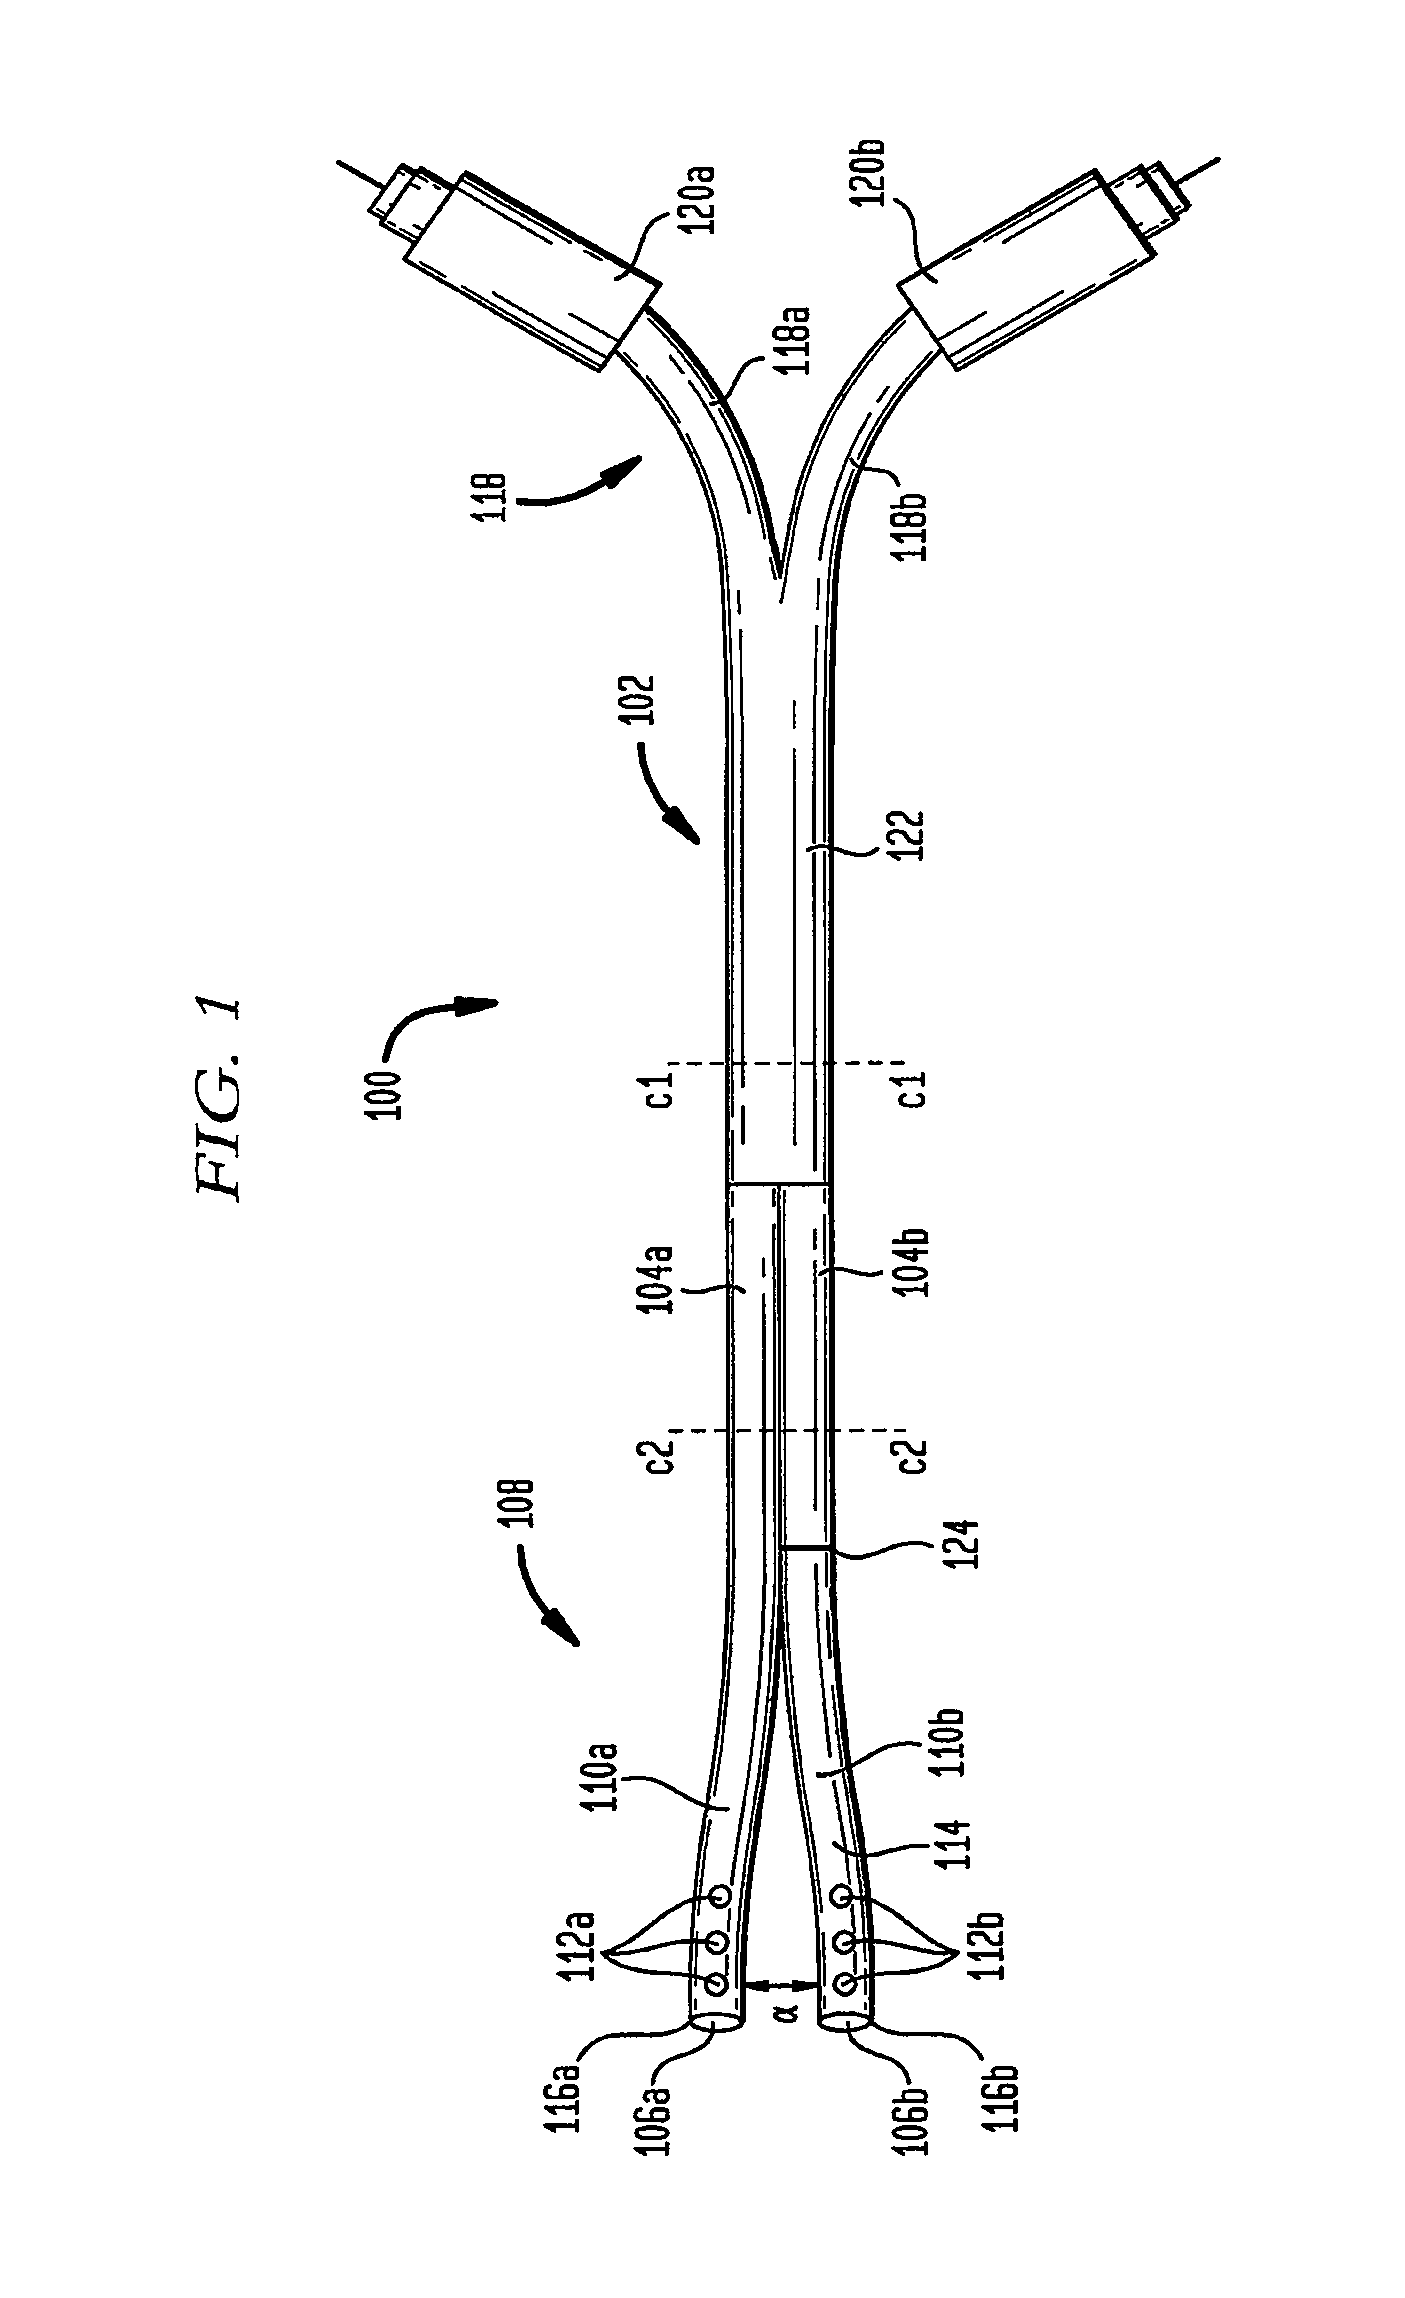 Manufacture of split tip catheters